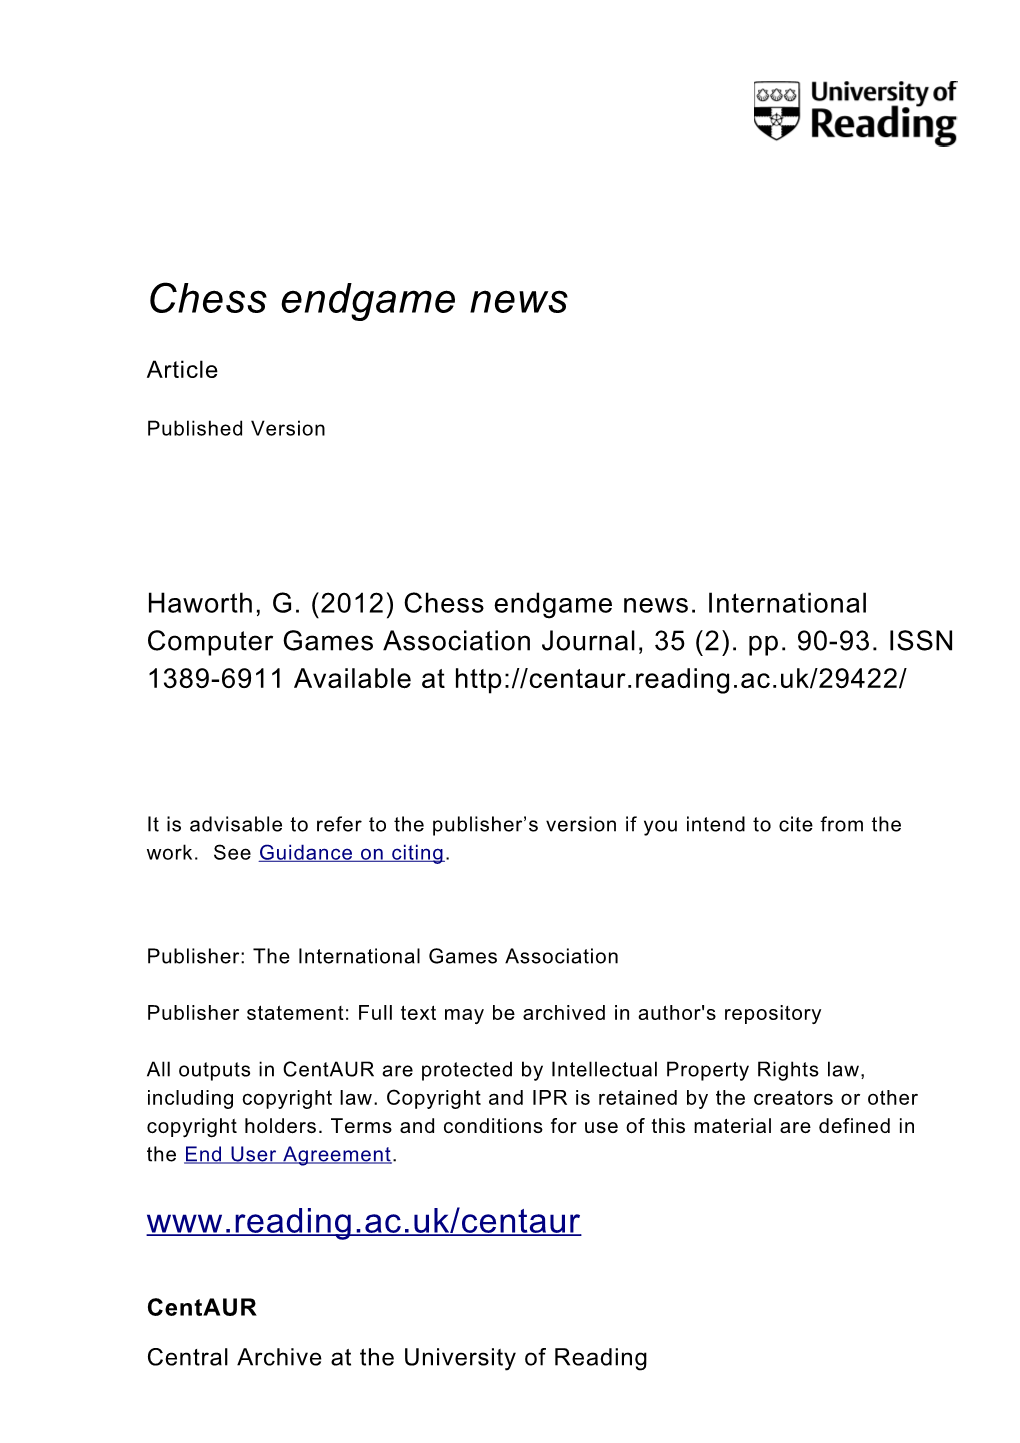 Chess Endgame News